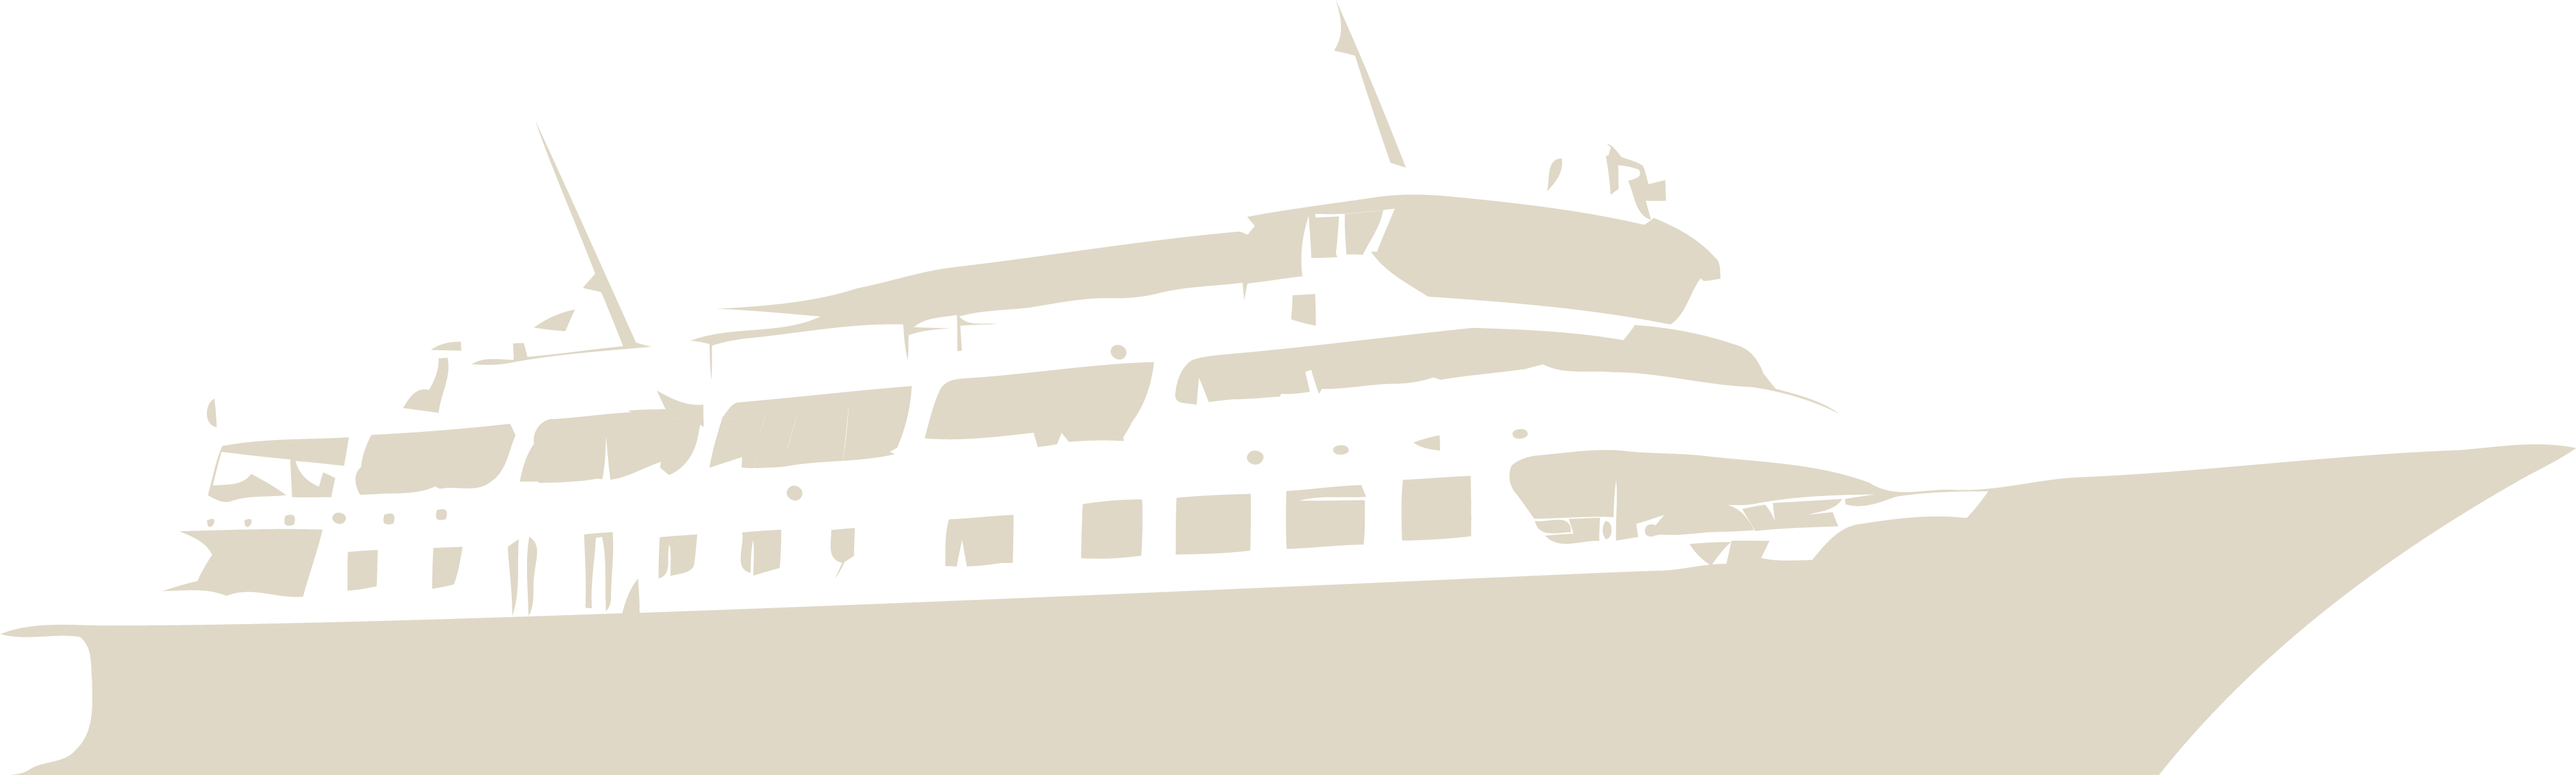 Silhouetteof Cruise Shipat Dusk PNG